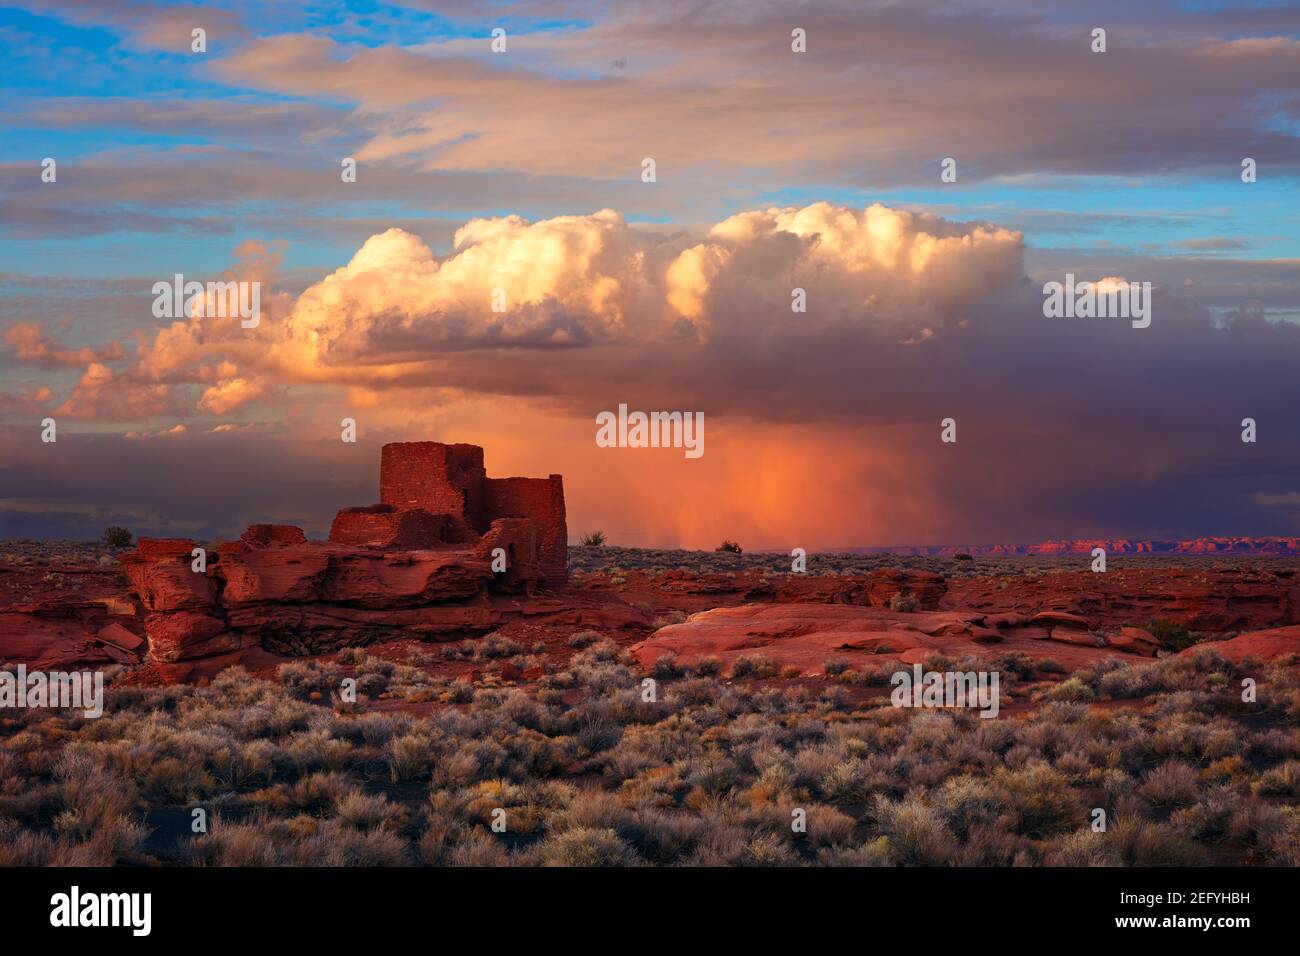 Scenic sunset view of the Lomaki Pueblo Ruin in Wupatki National Monument near Flagstaff, Arizona Stock Photo